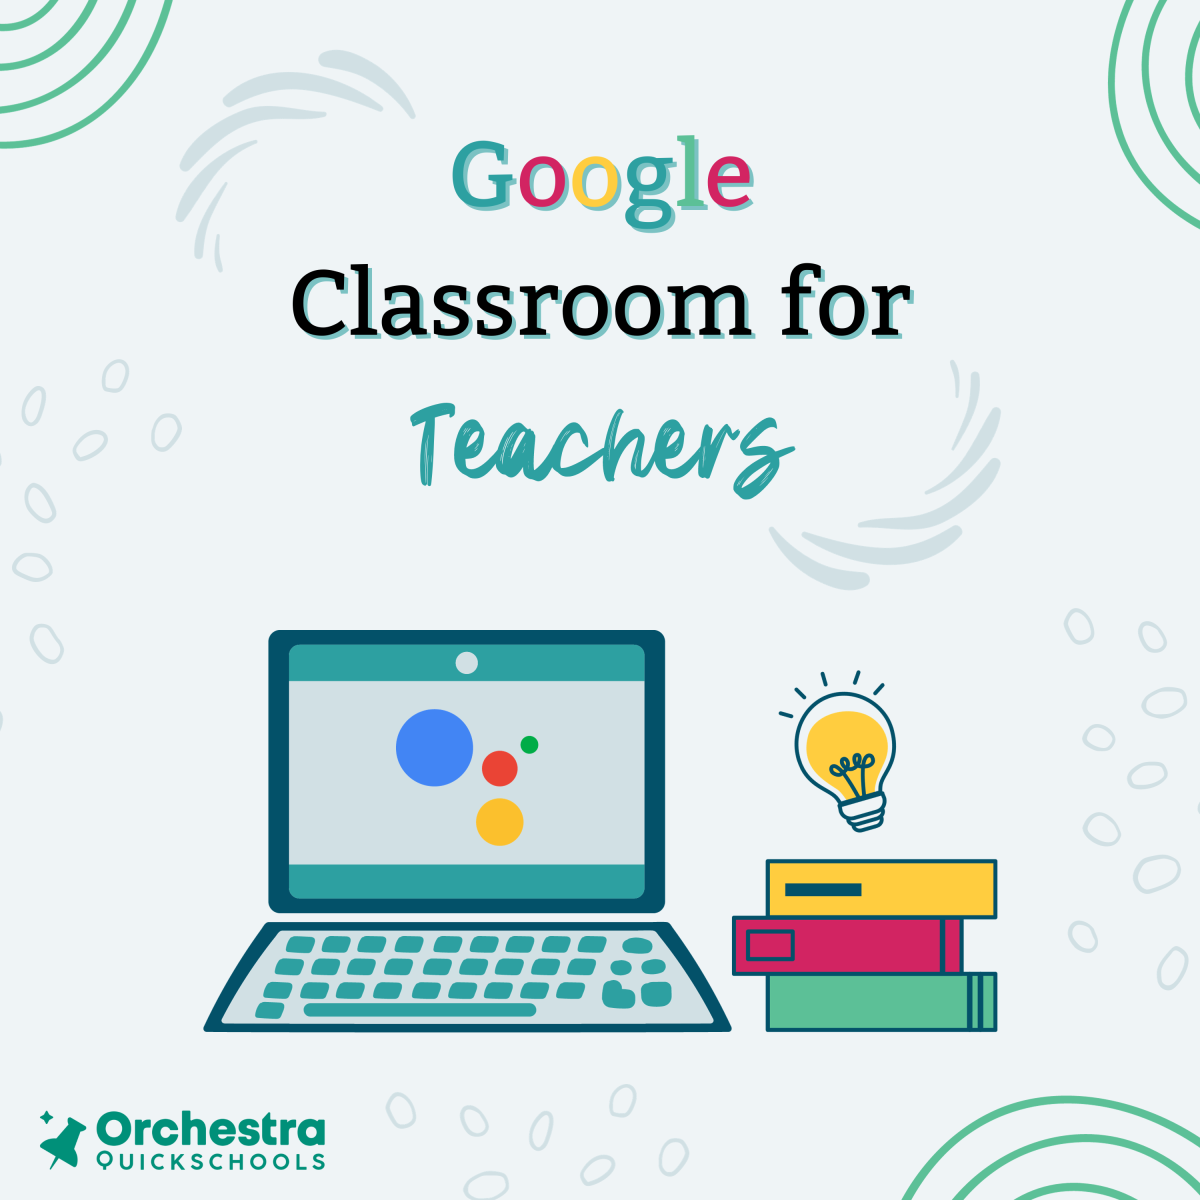 Google Classroom 101: Comprehensive Guide to Google Classroom for Teachers